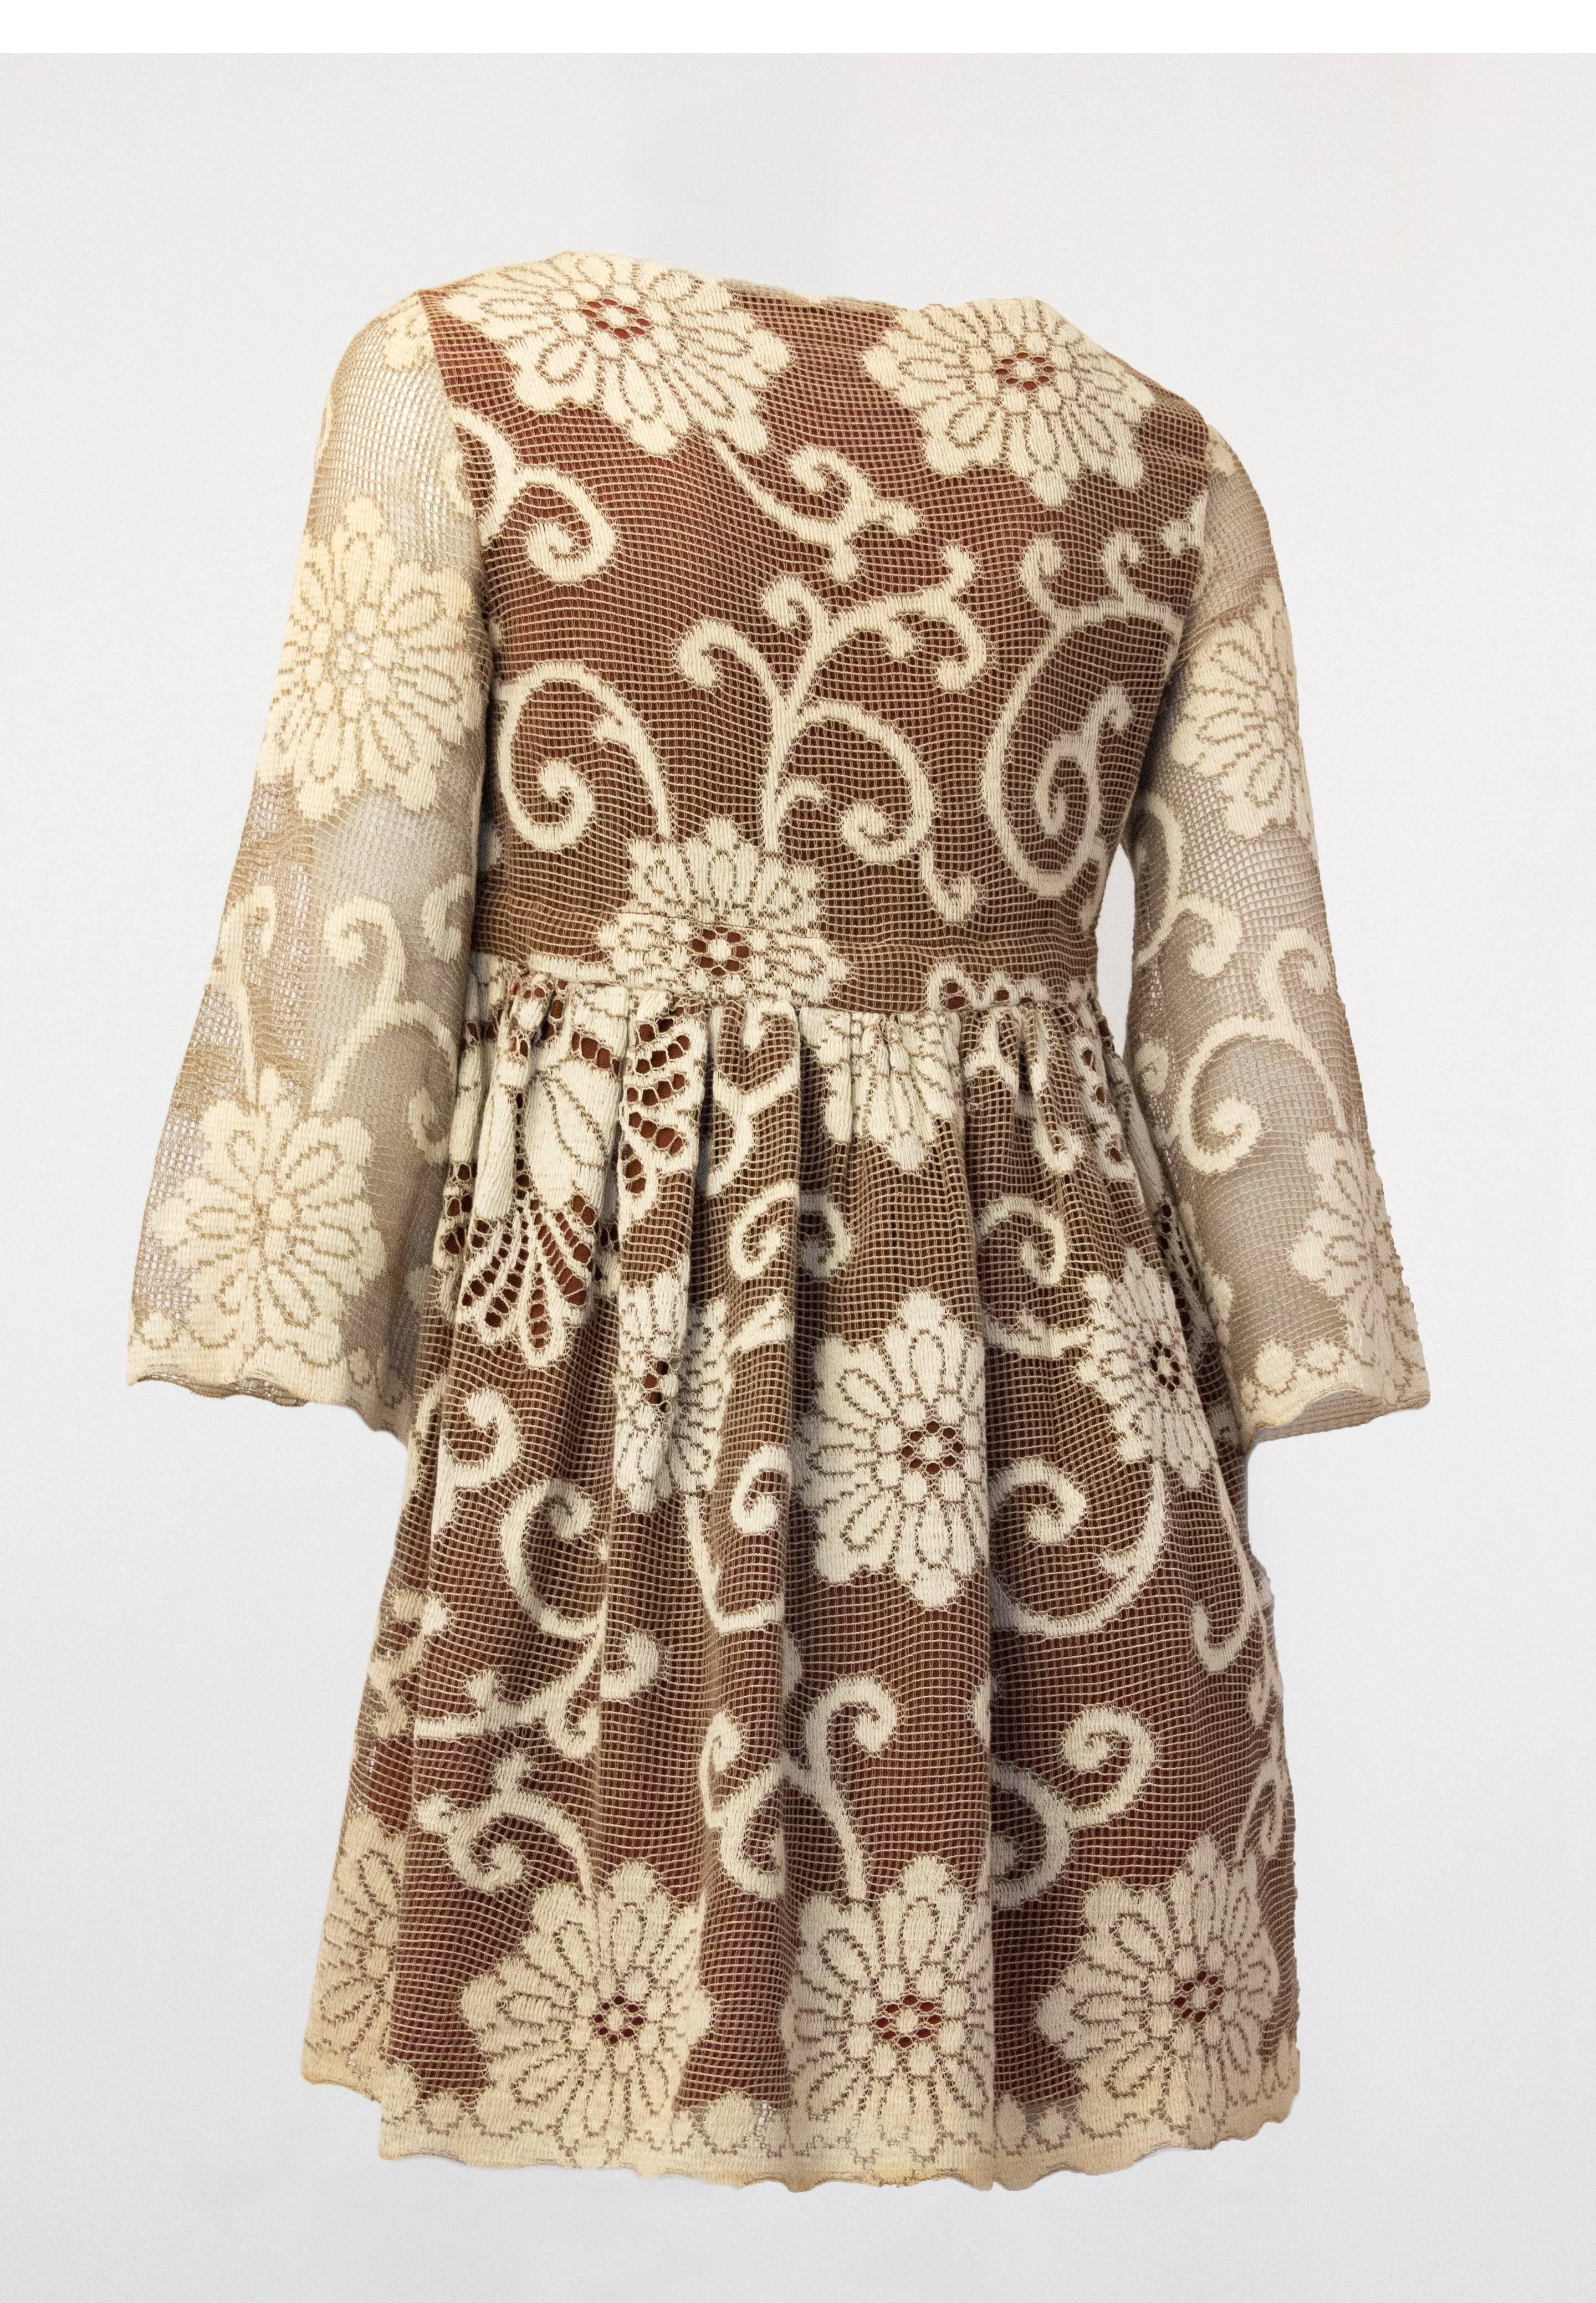 60s mini babydoll dress in cream lace over brown crepe. Empire waist tie. 

 